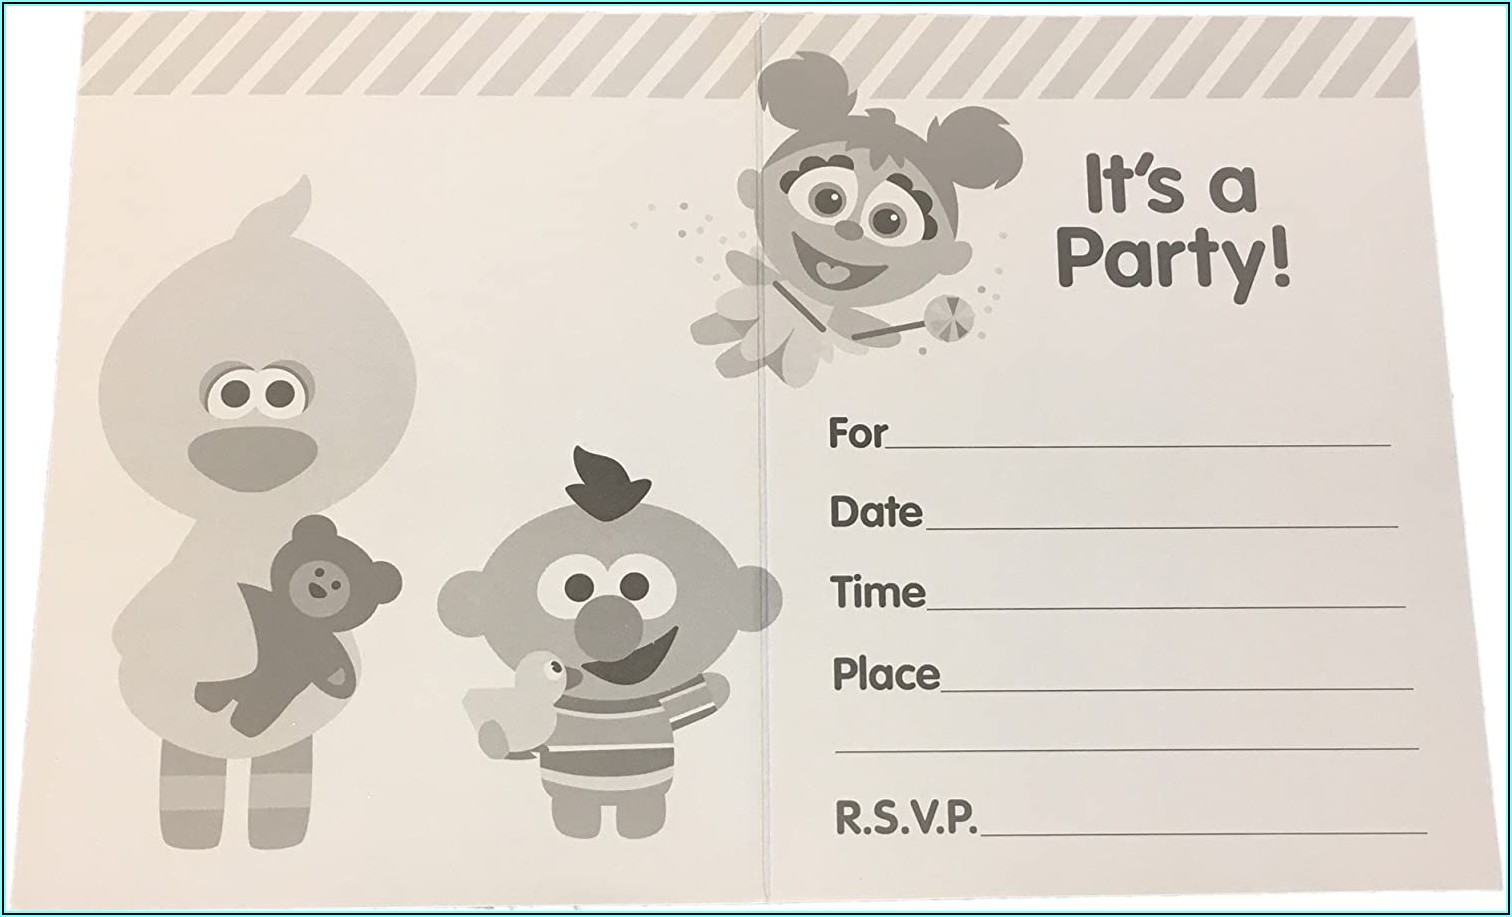 Sesame Street 1st Birthday Party Invitations